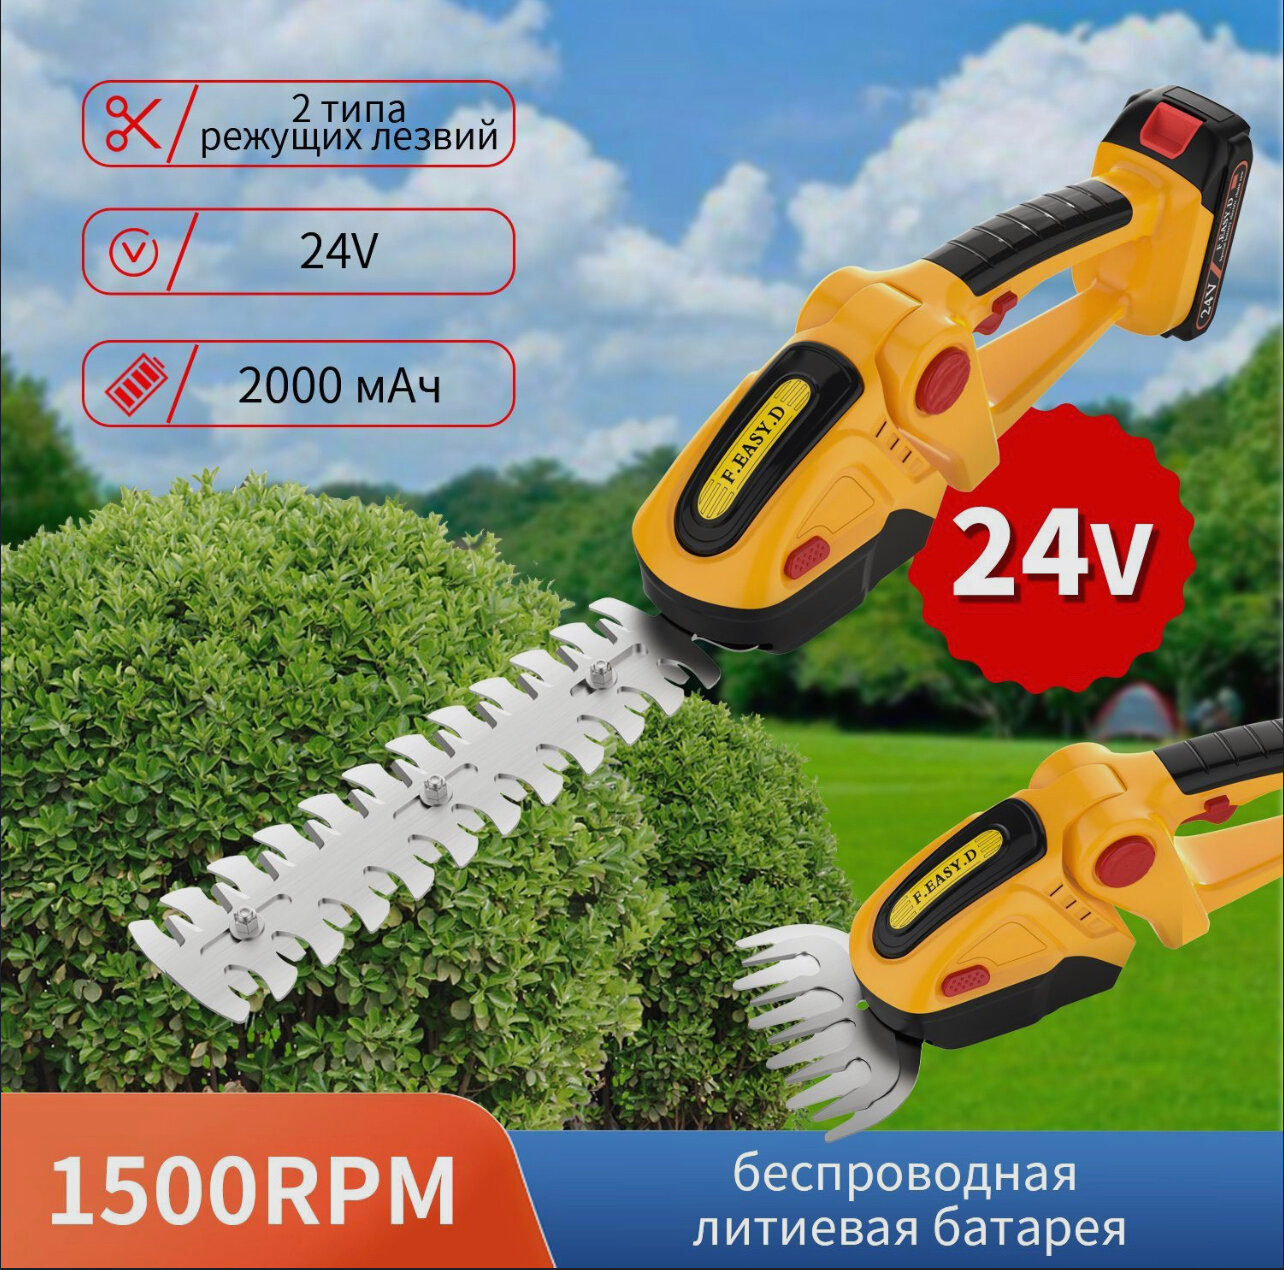 Кусторез аккумуляторный 24V триммер электрический кусторез садовый садовые ножницы 2000мАч,400W,1500об/мин, рез 8 мм